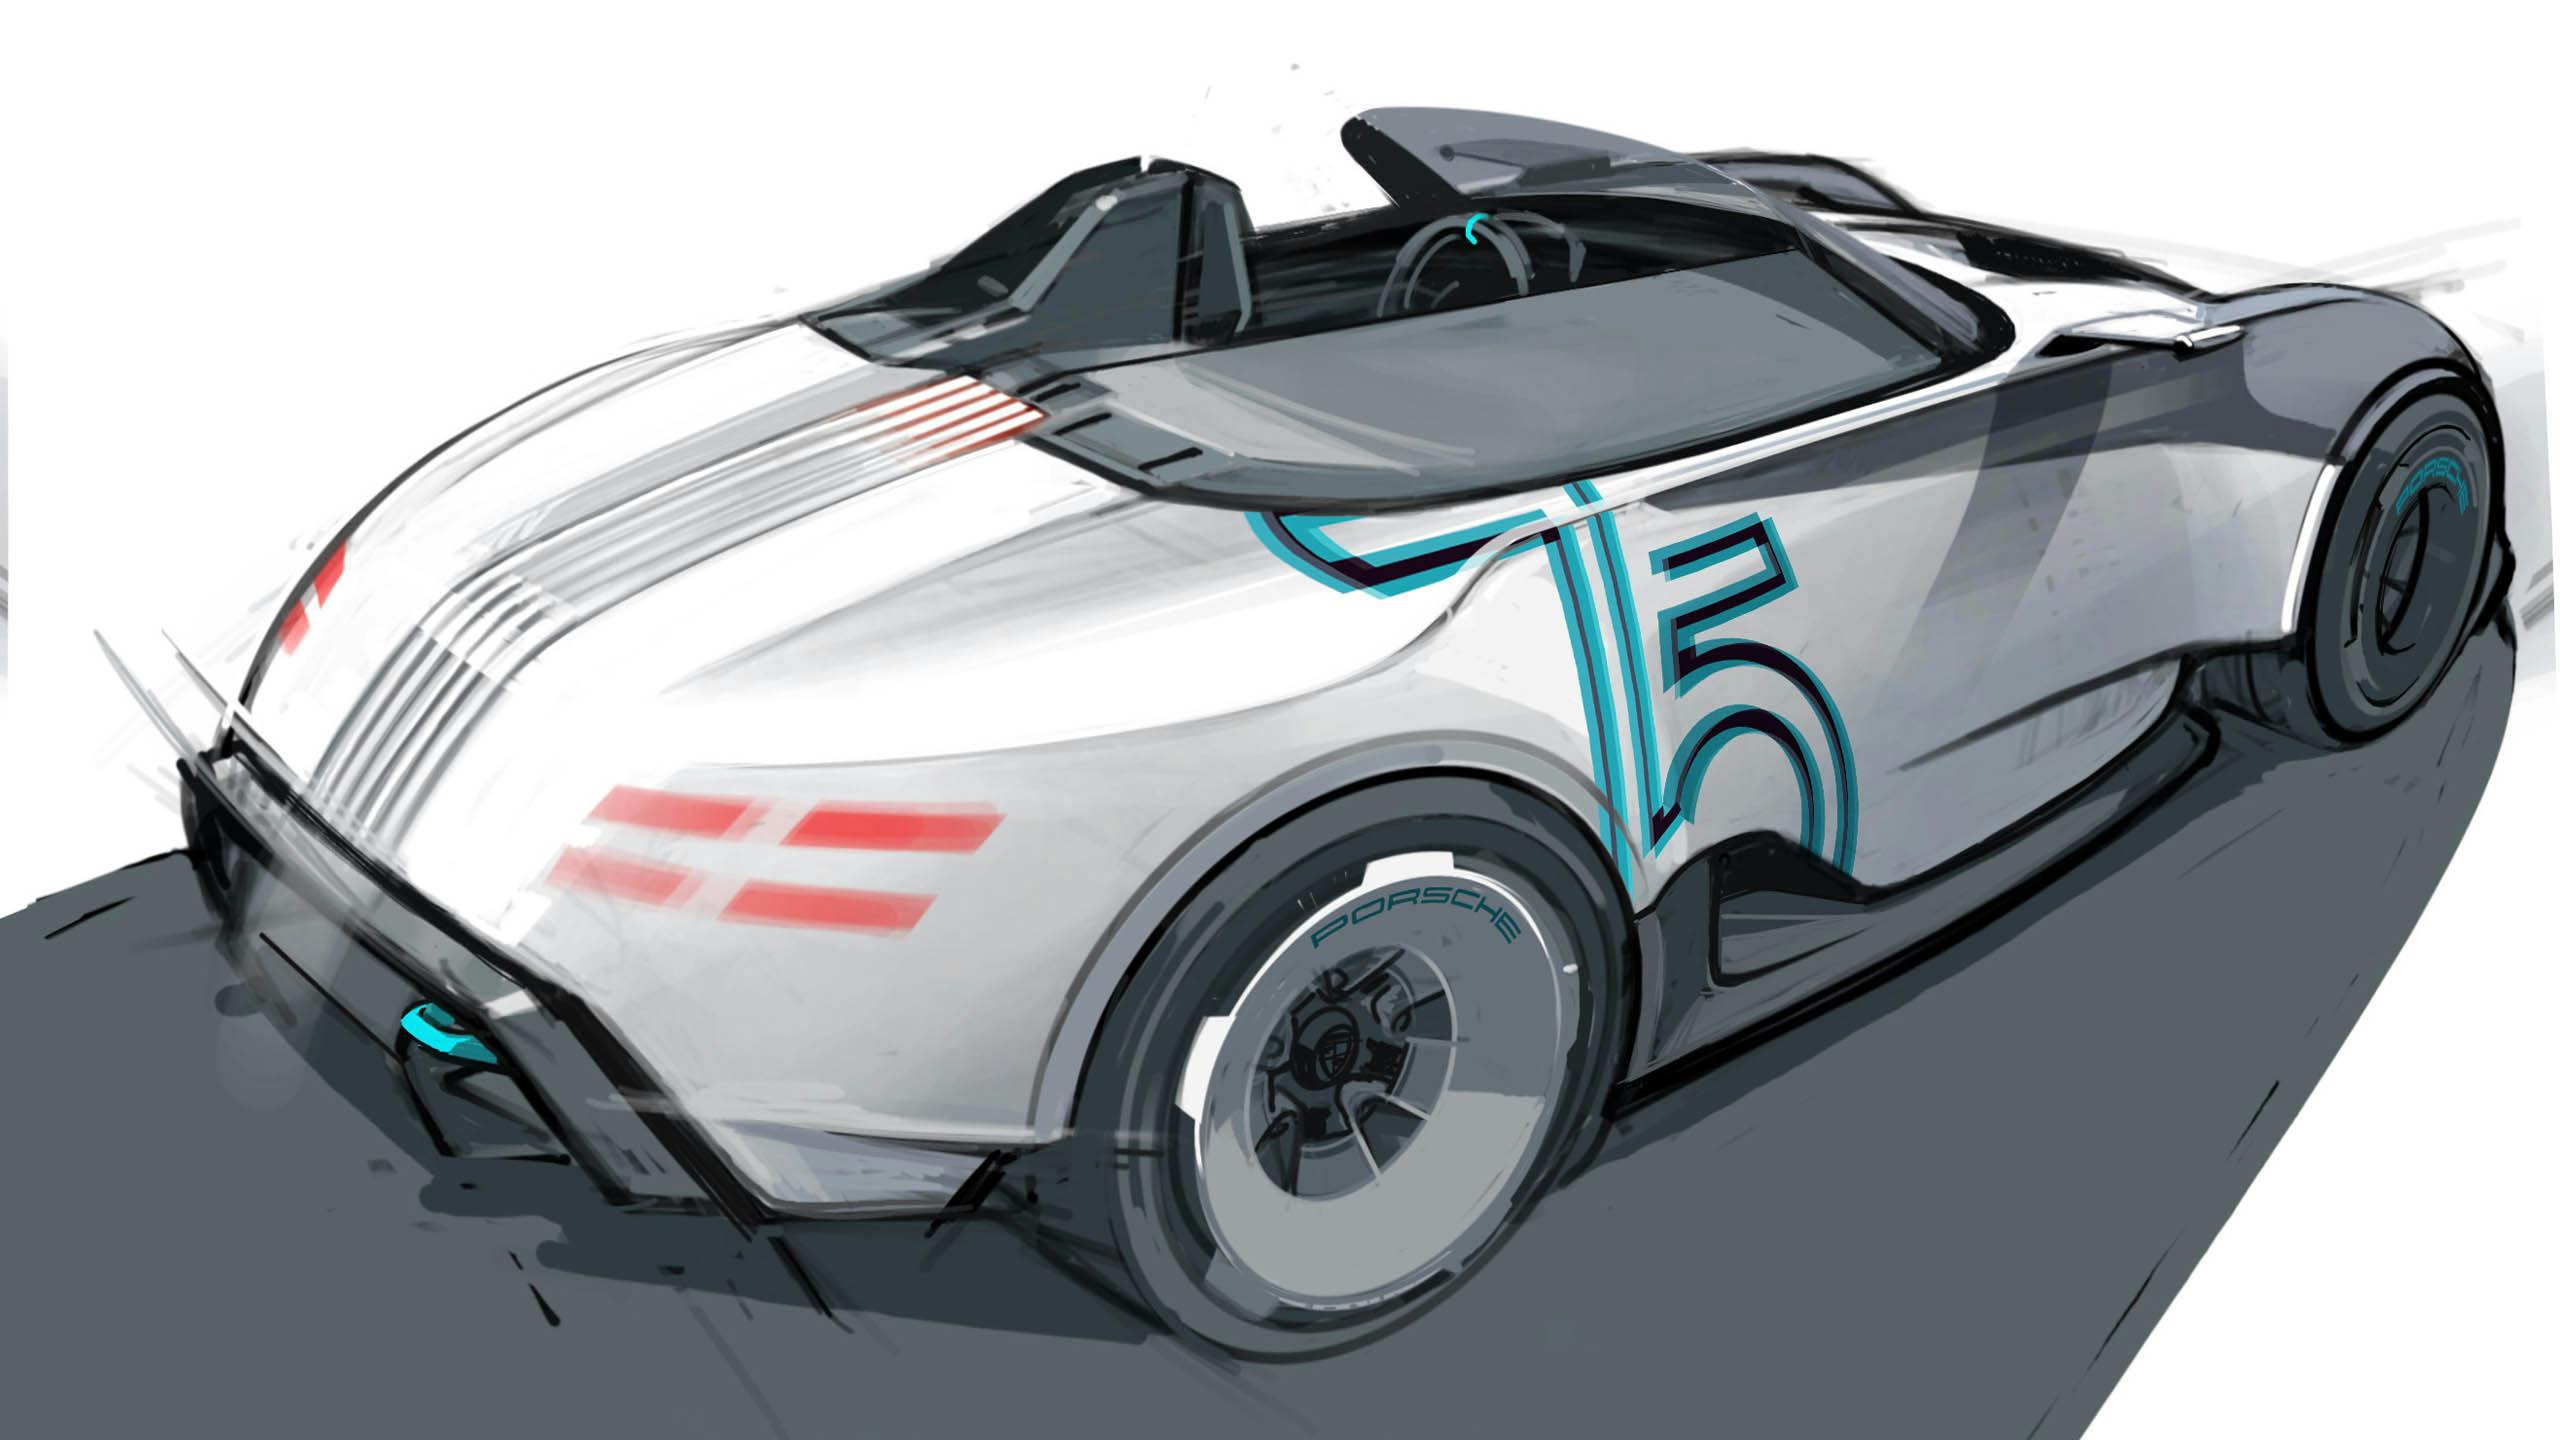 Porsche Vision 357 Speedster concept drawing